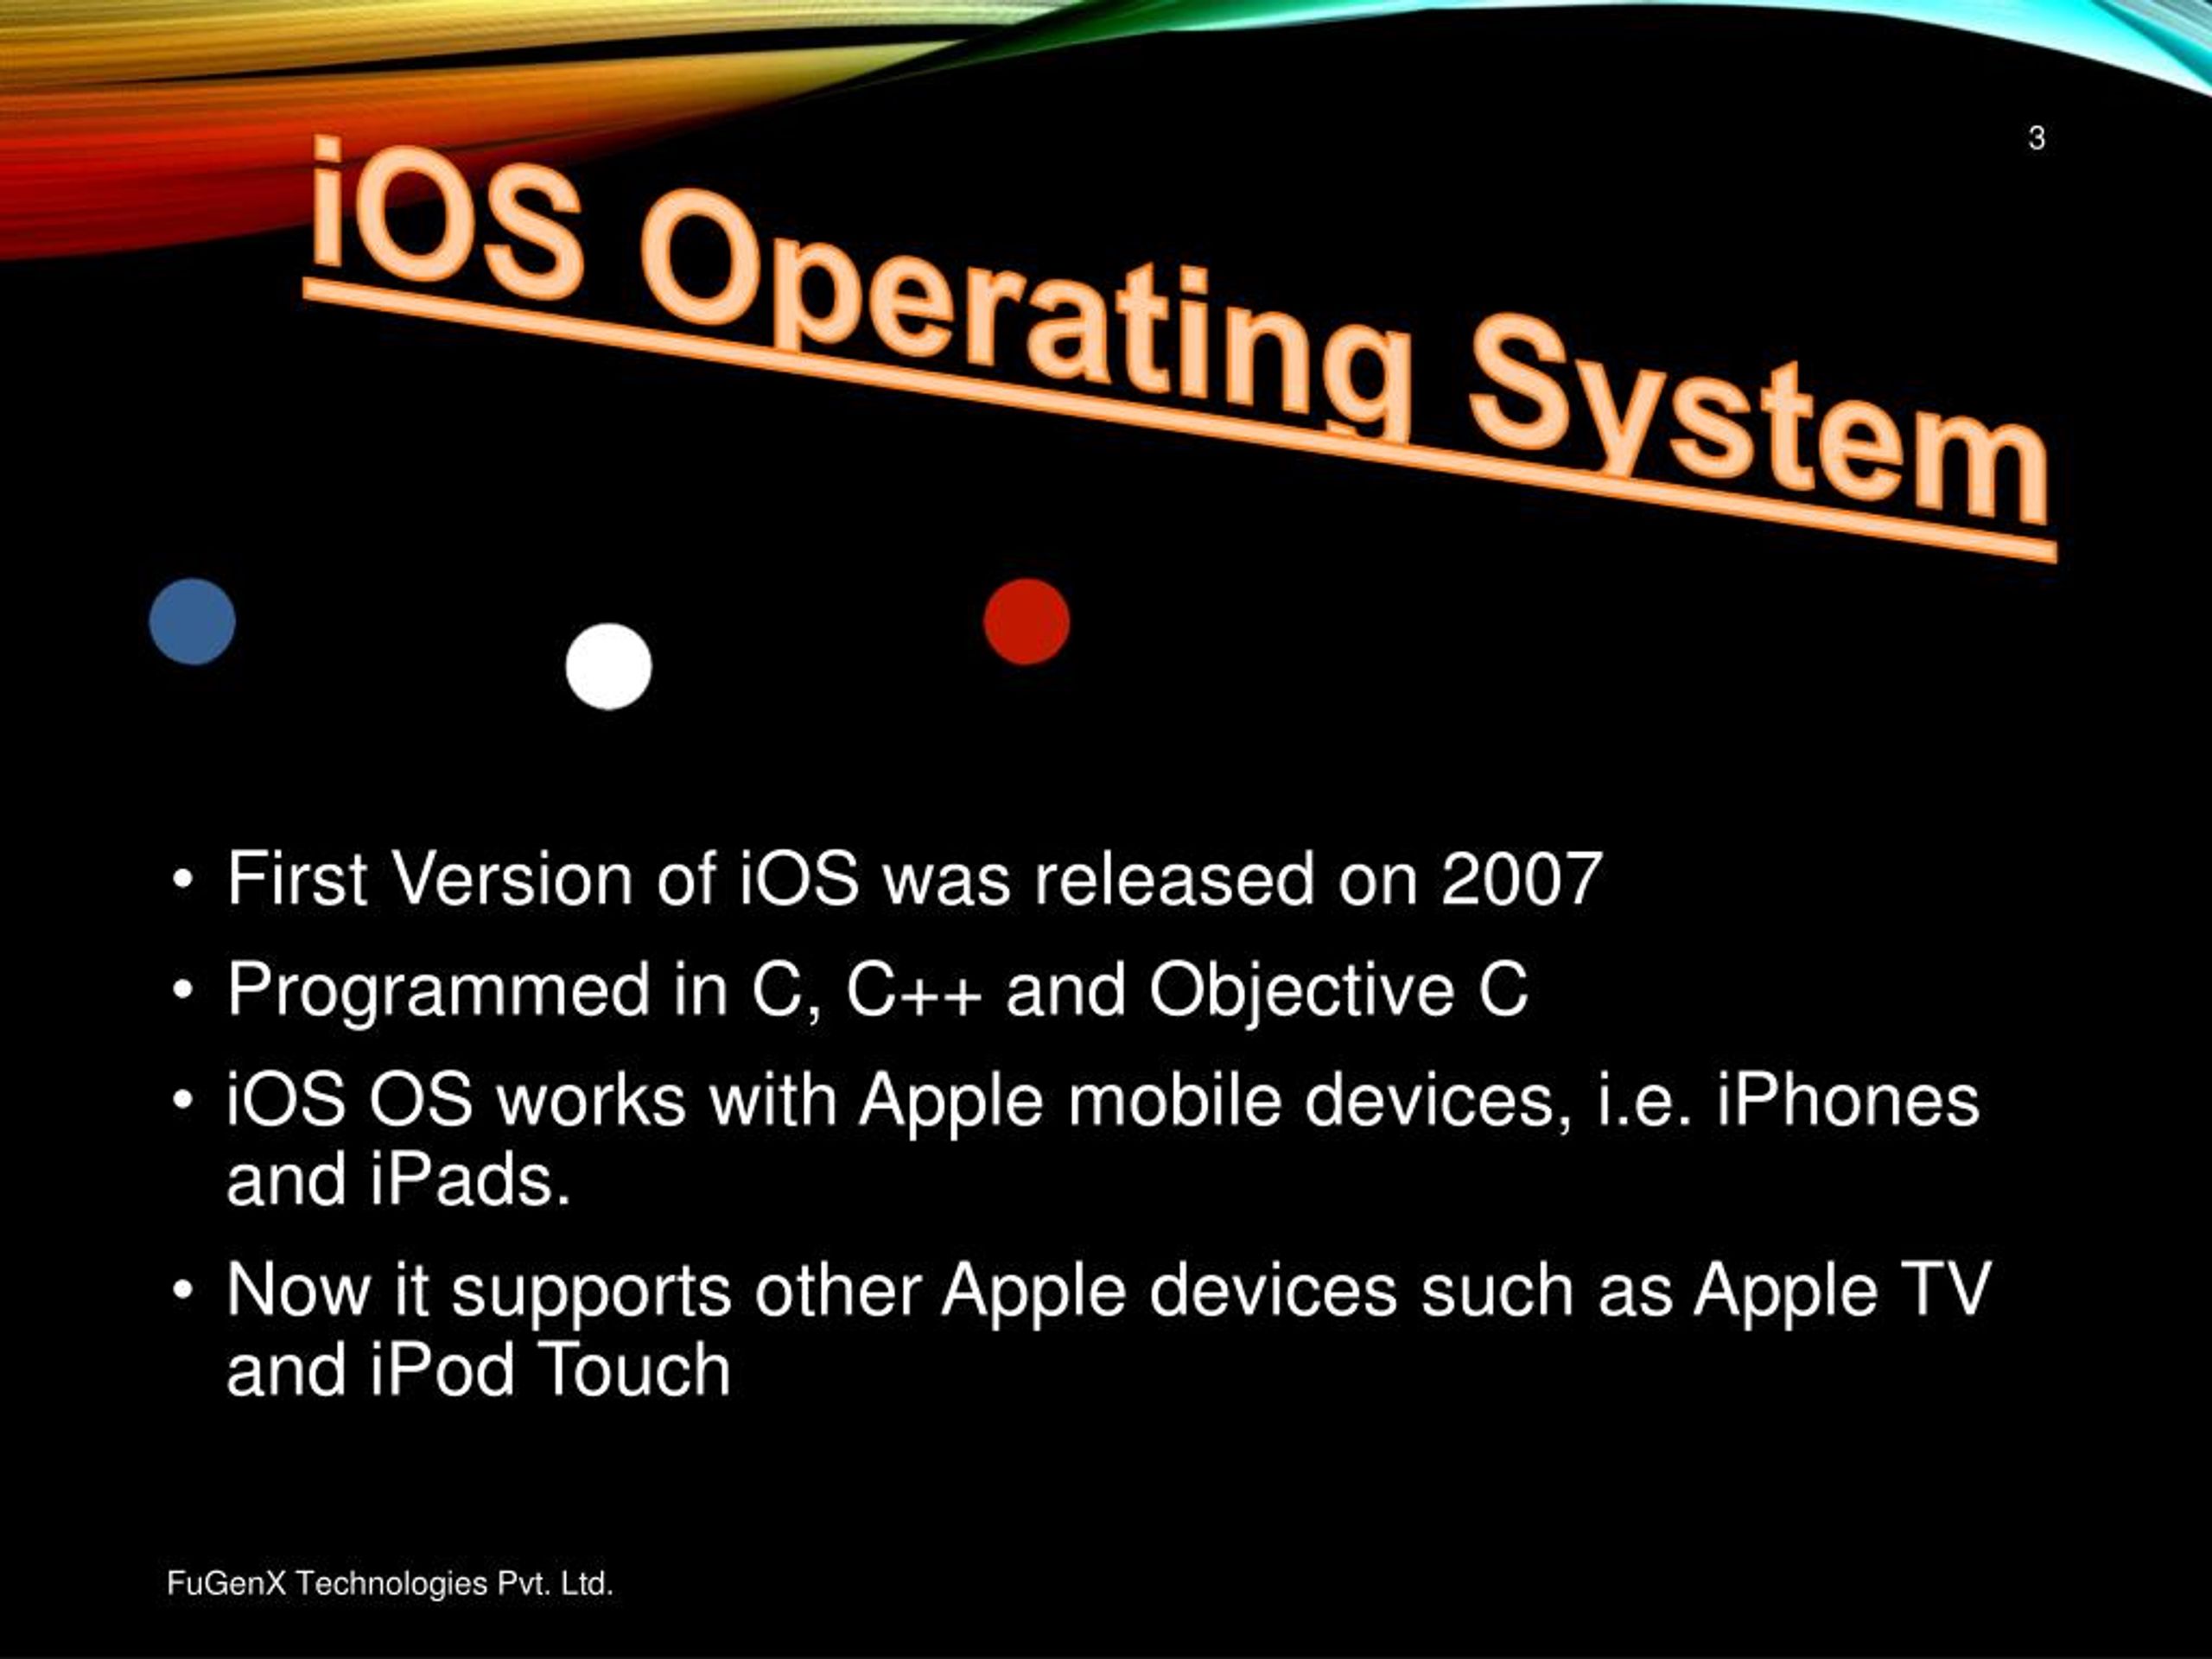 presentation on ios operating system